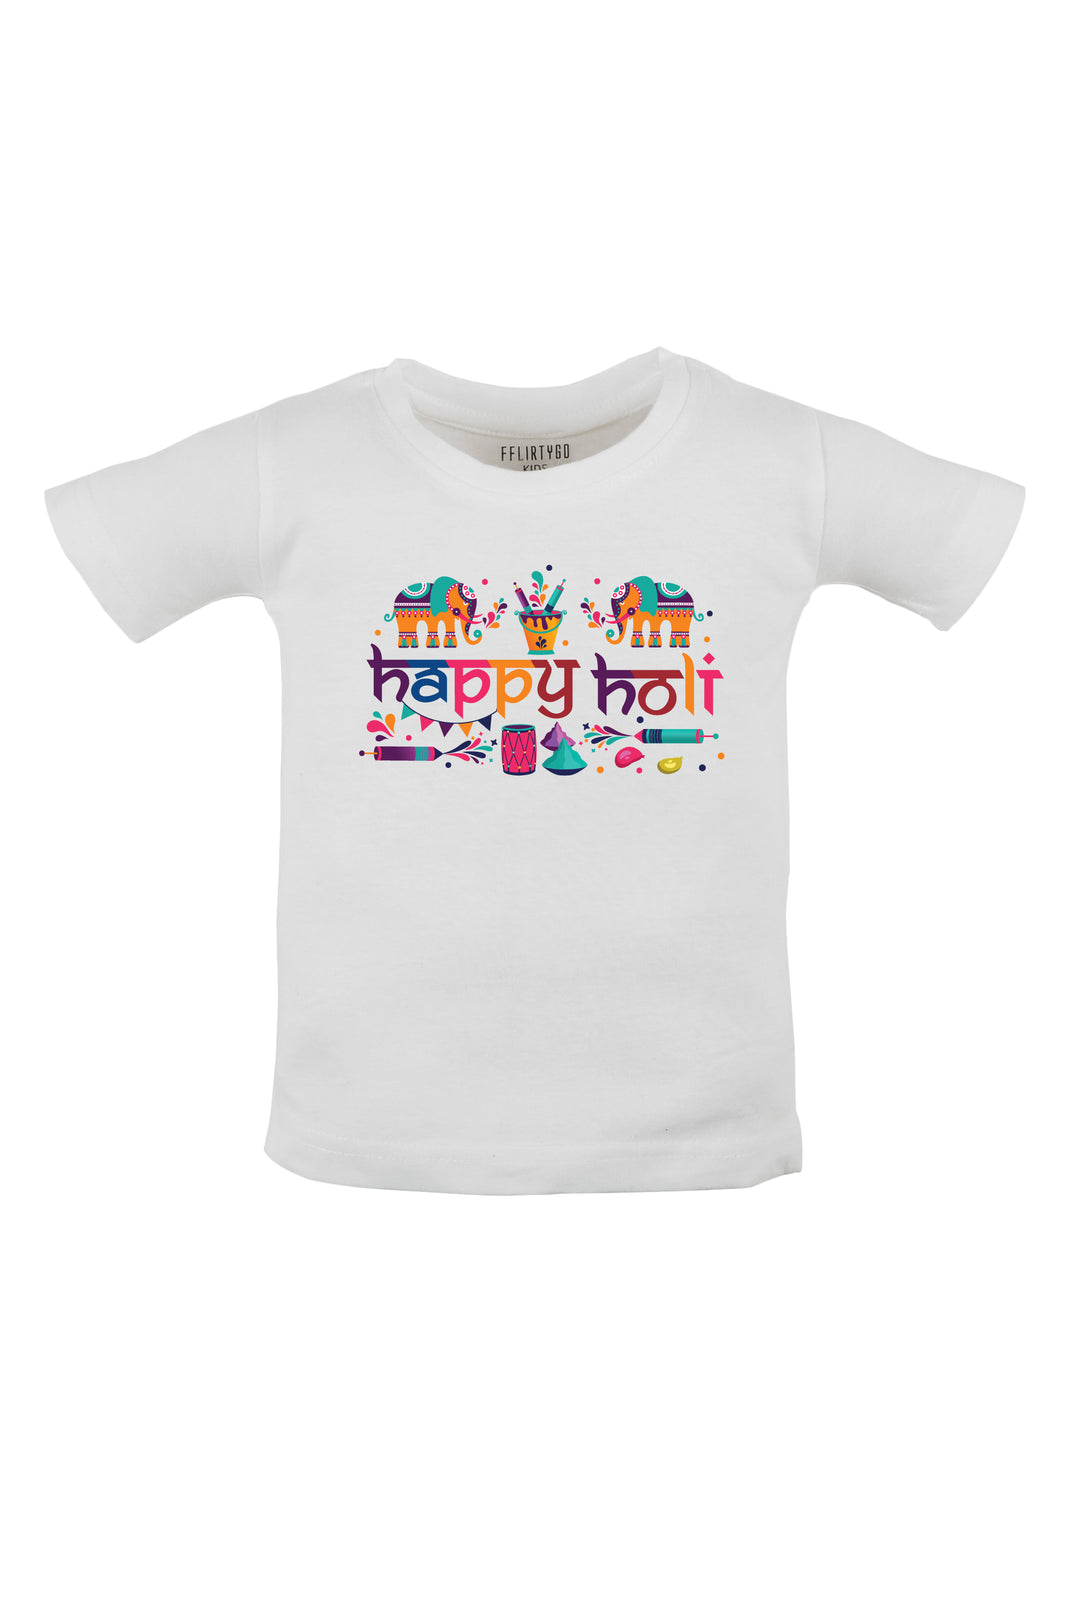 Happy Holi Kids T Shirt